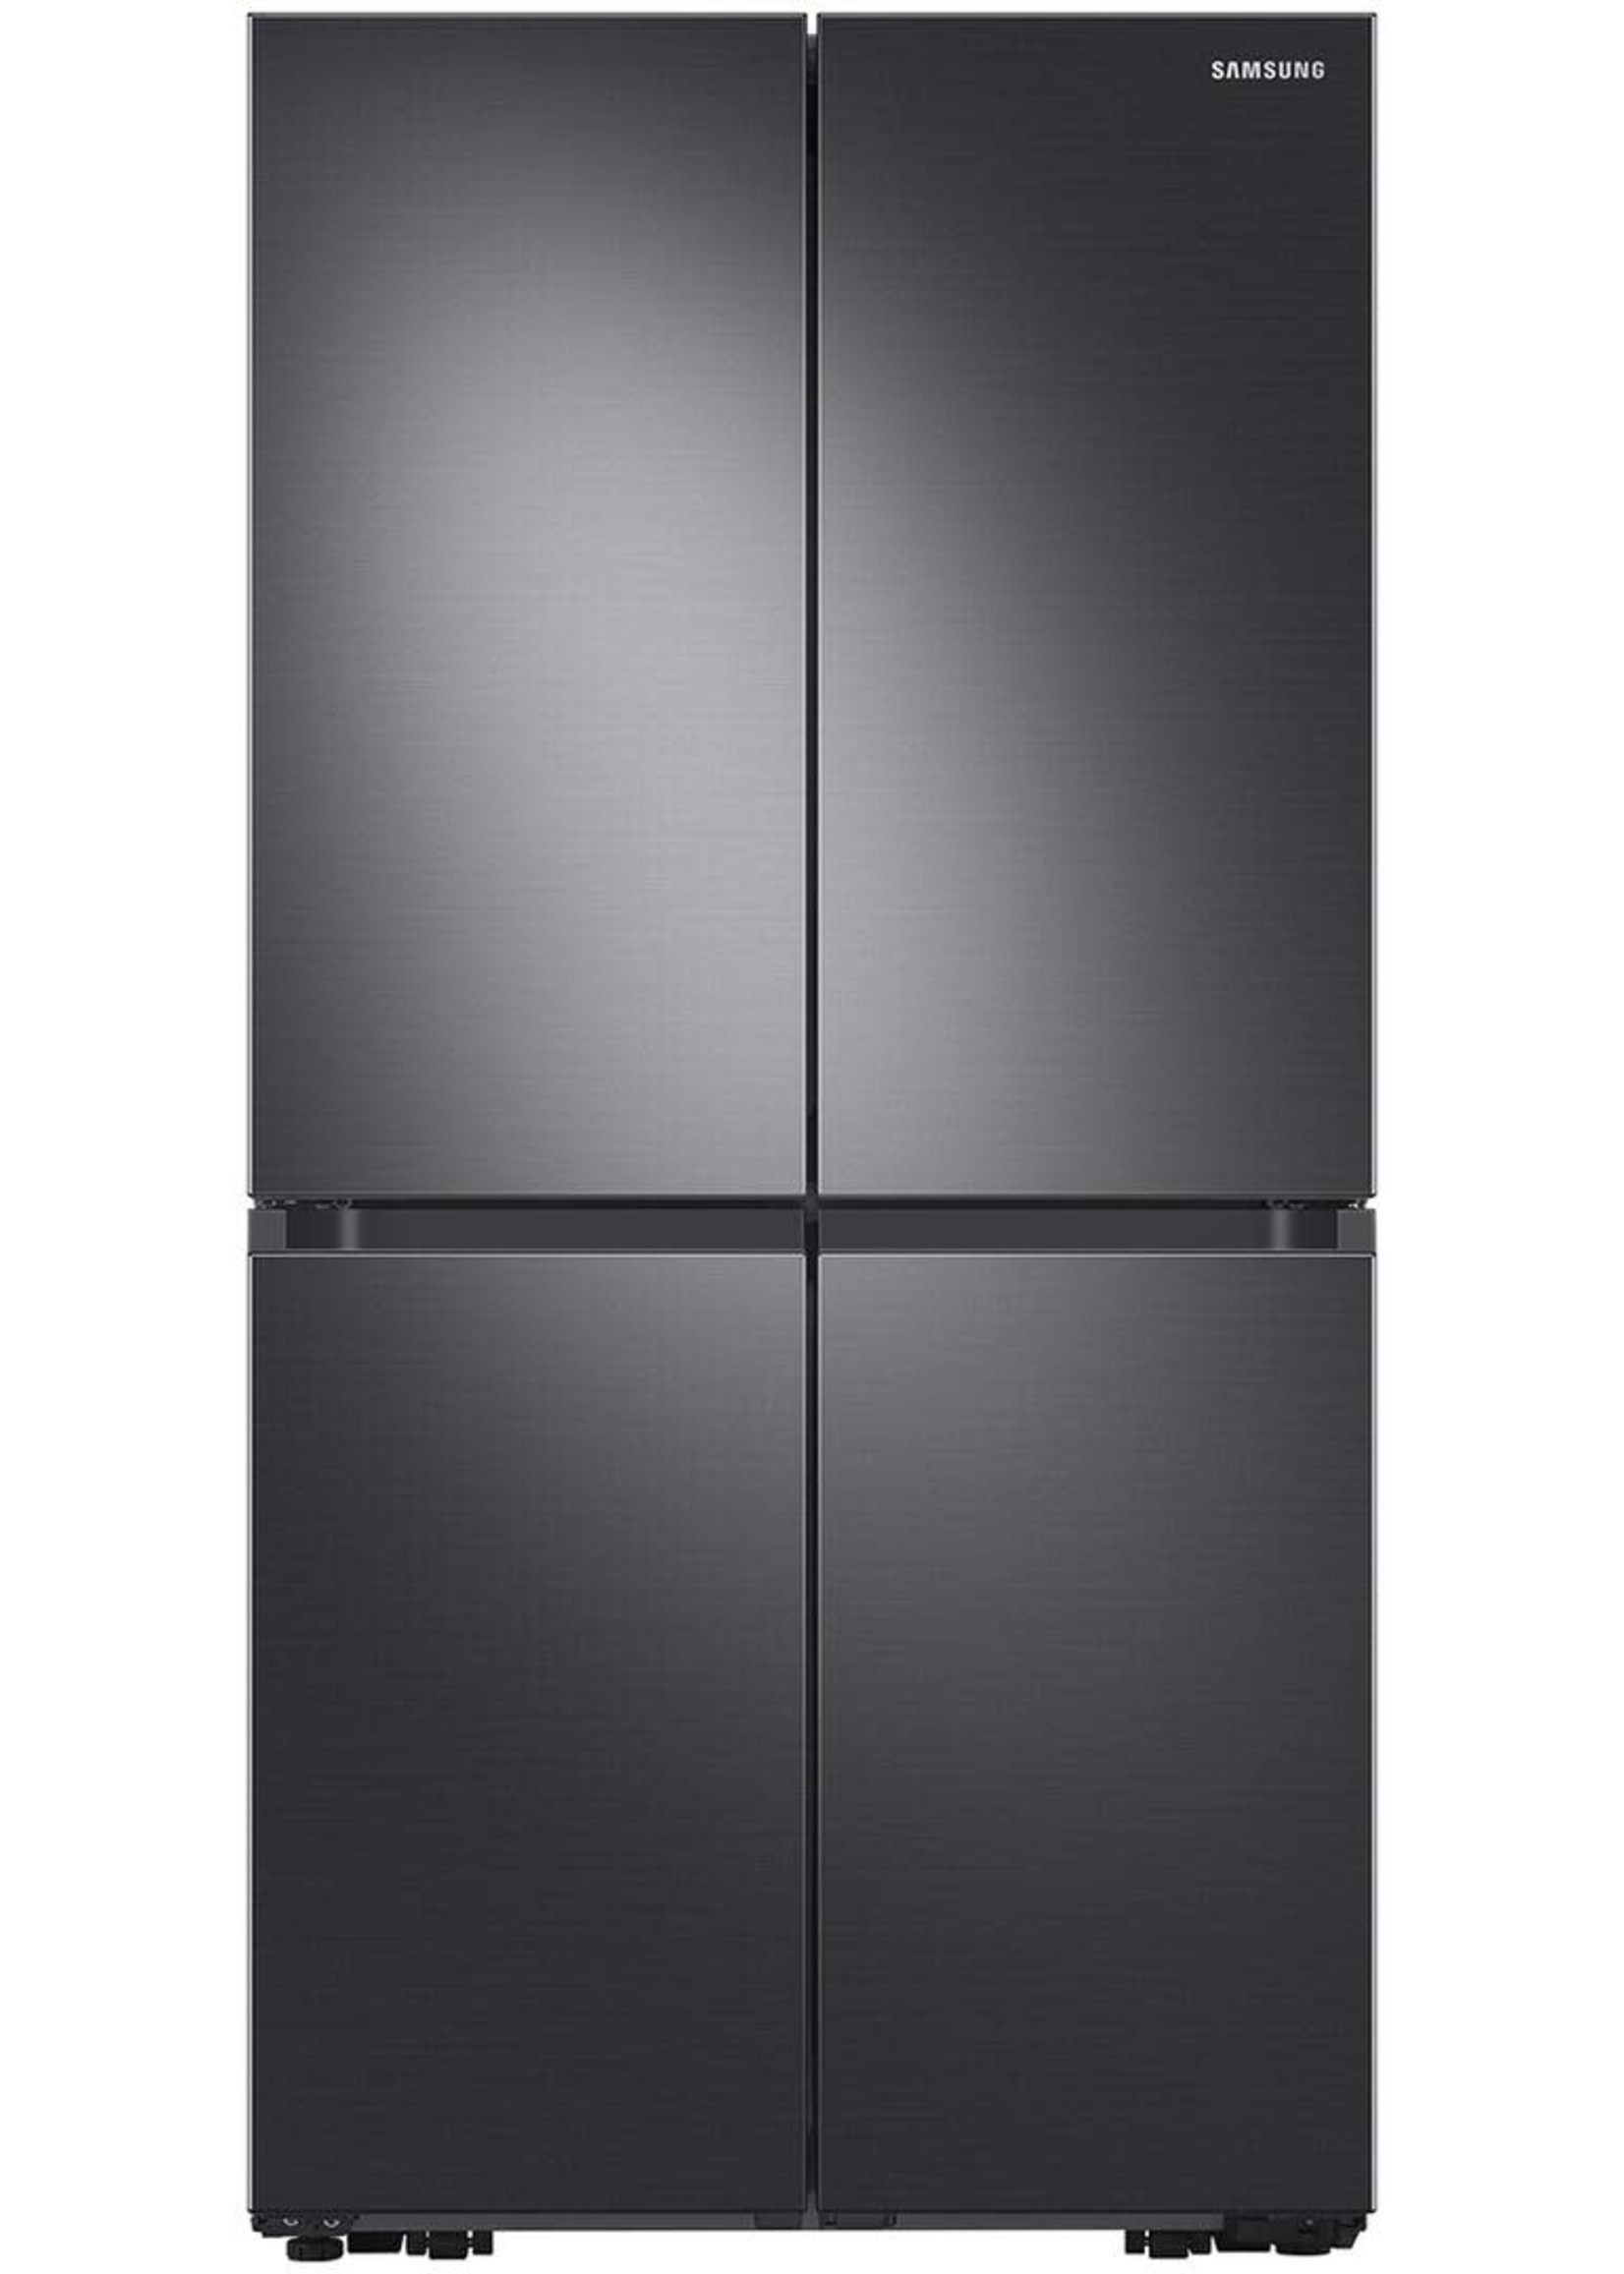 SAMSUNG Samsung 23 cu. ft. 4-Door Flex Food Showcase French Door Refrigerator in Black Stainless, Counter Depth